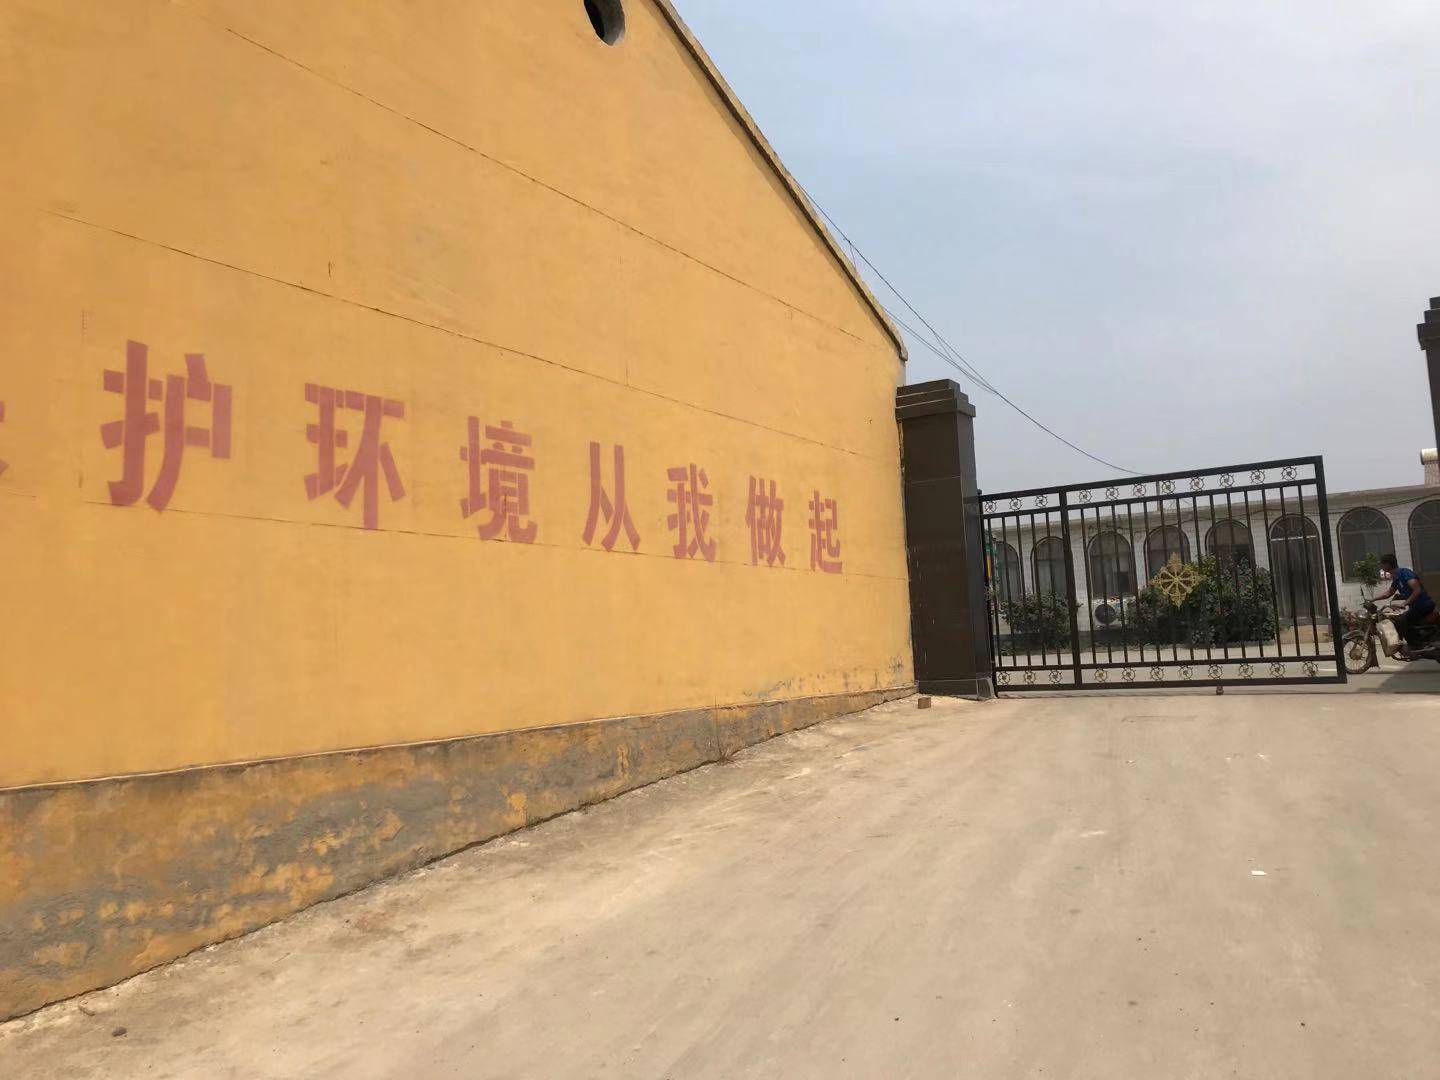   Lingshou Xinde Mining Processing Factory